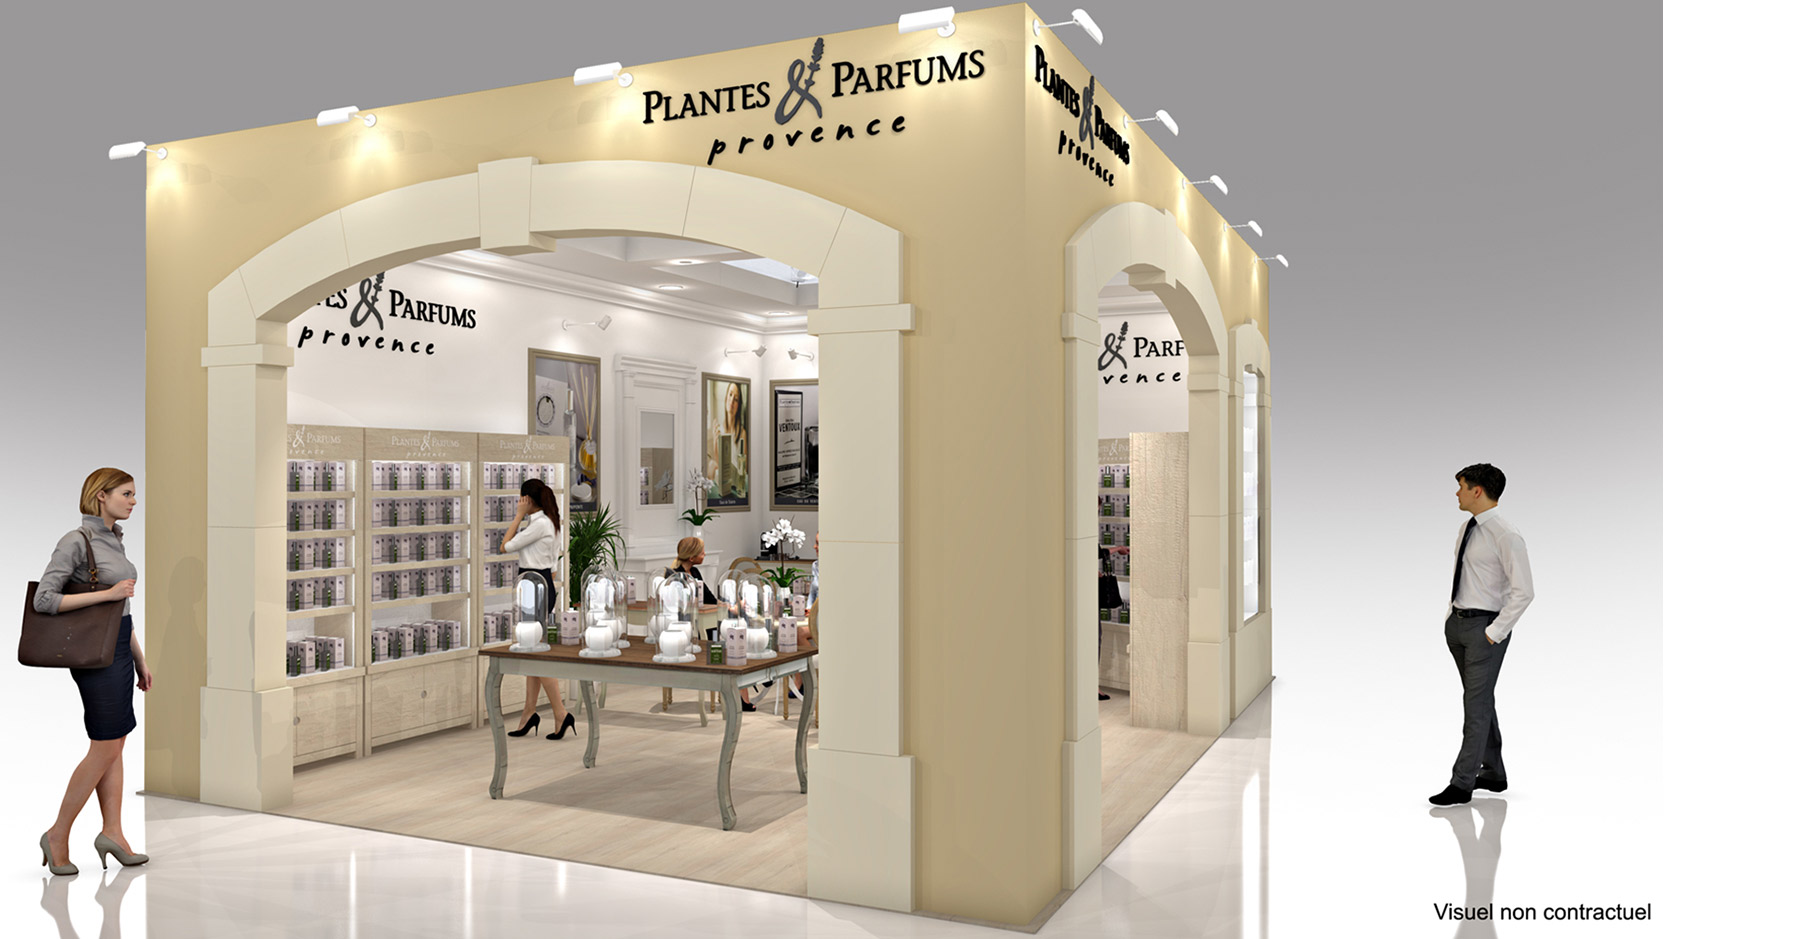 3D Render of Plantes & Parfum booth